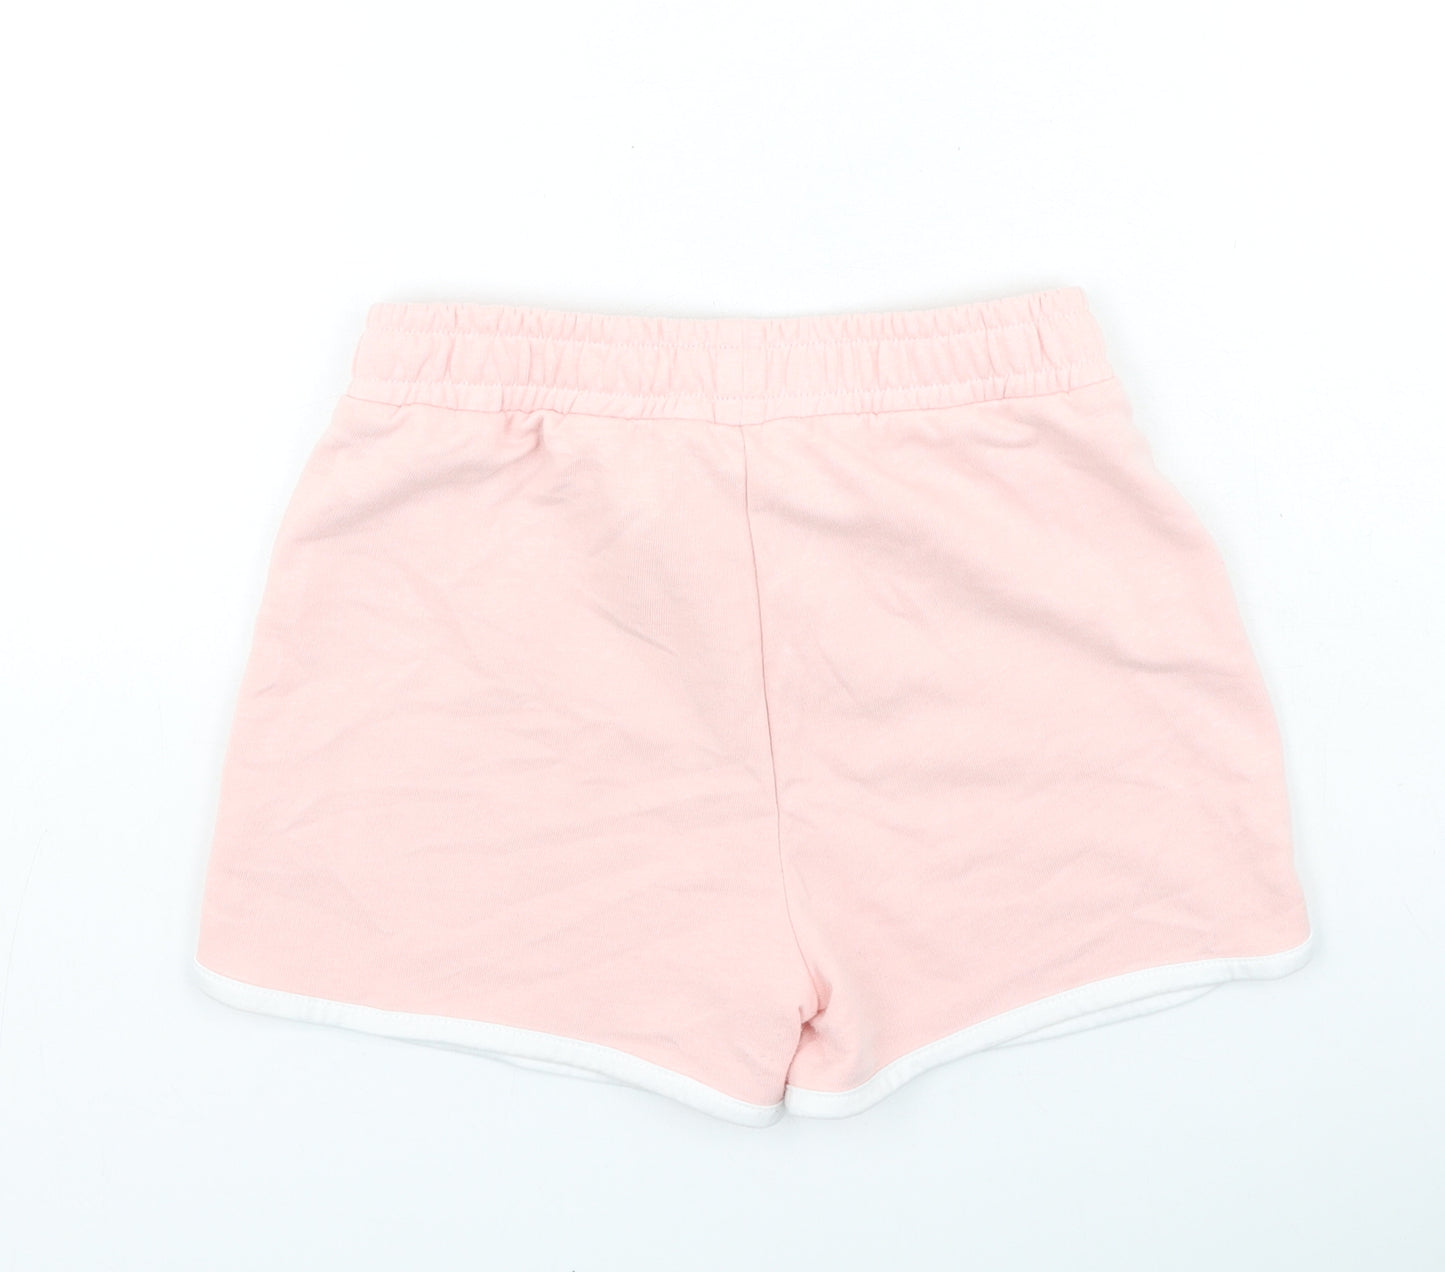 George  Girls Pink  Cotton Sweat Shorts Size 9-10 Years  Regular